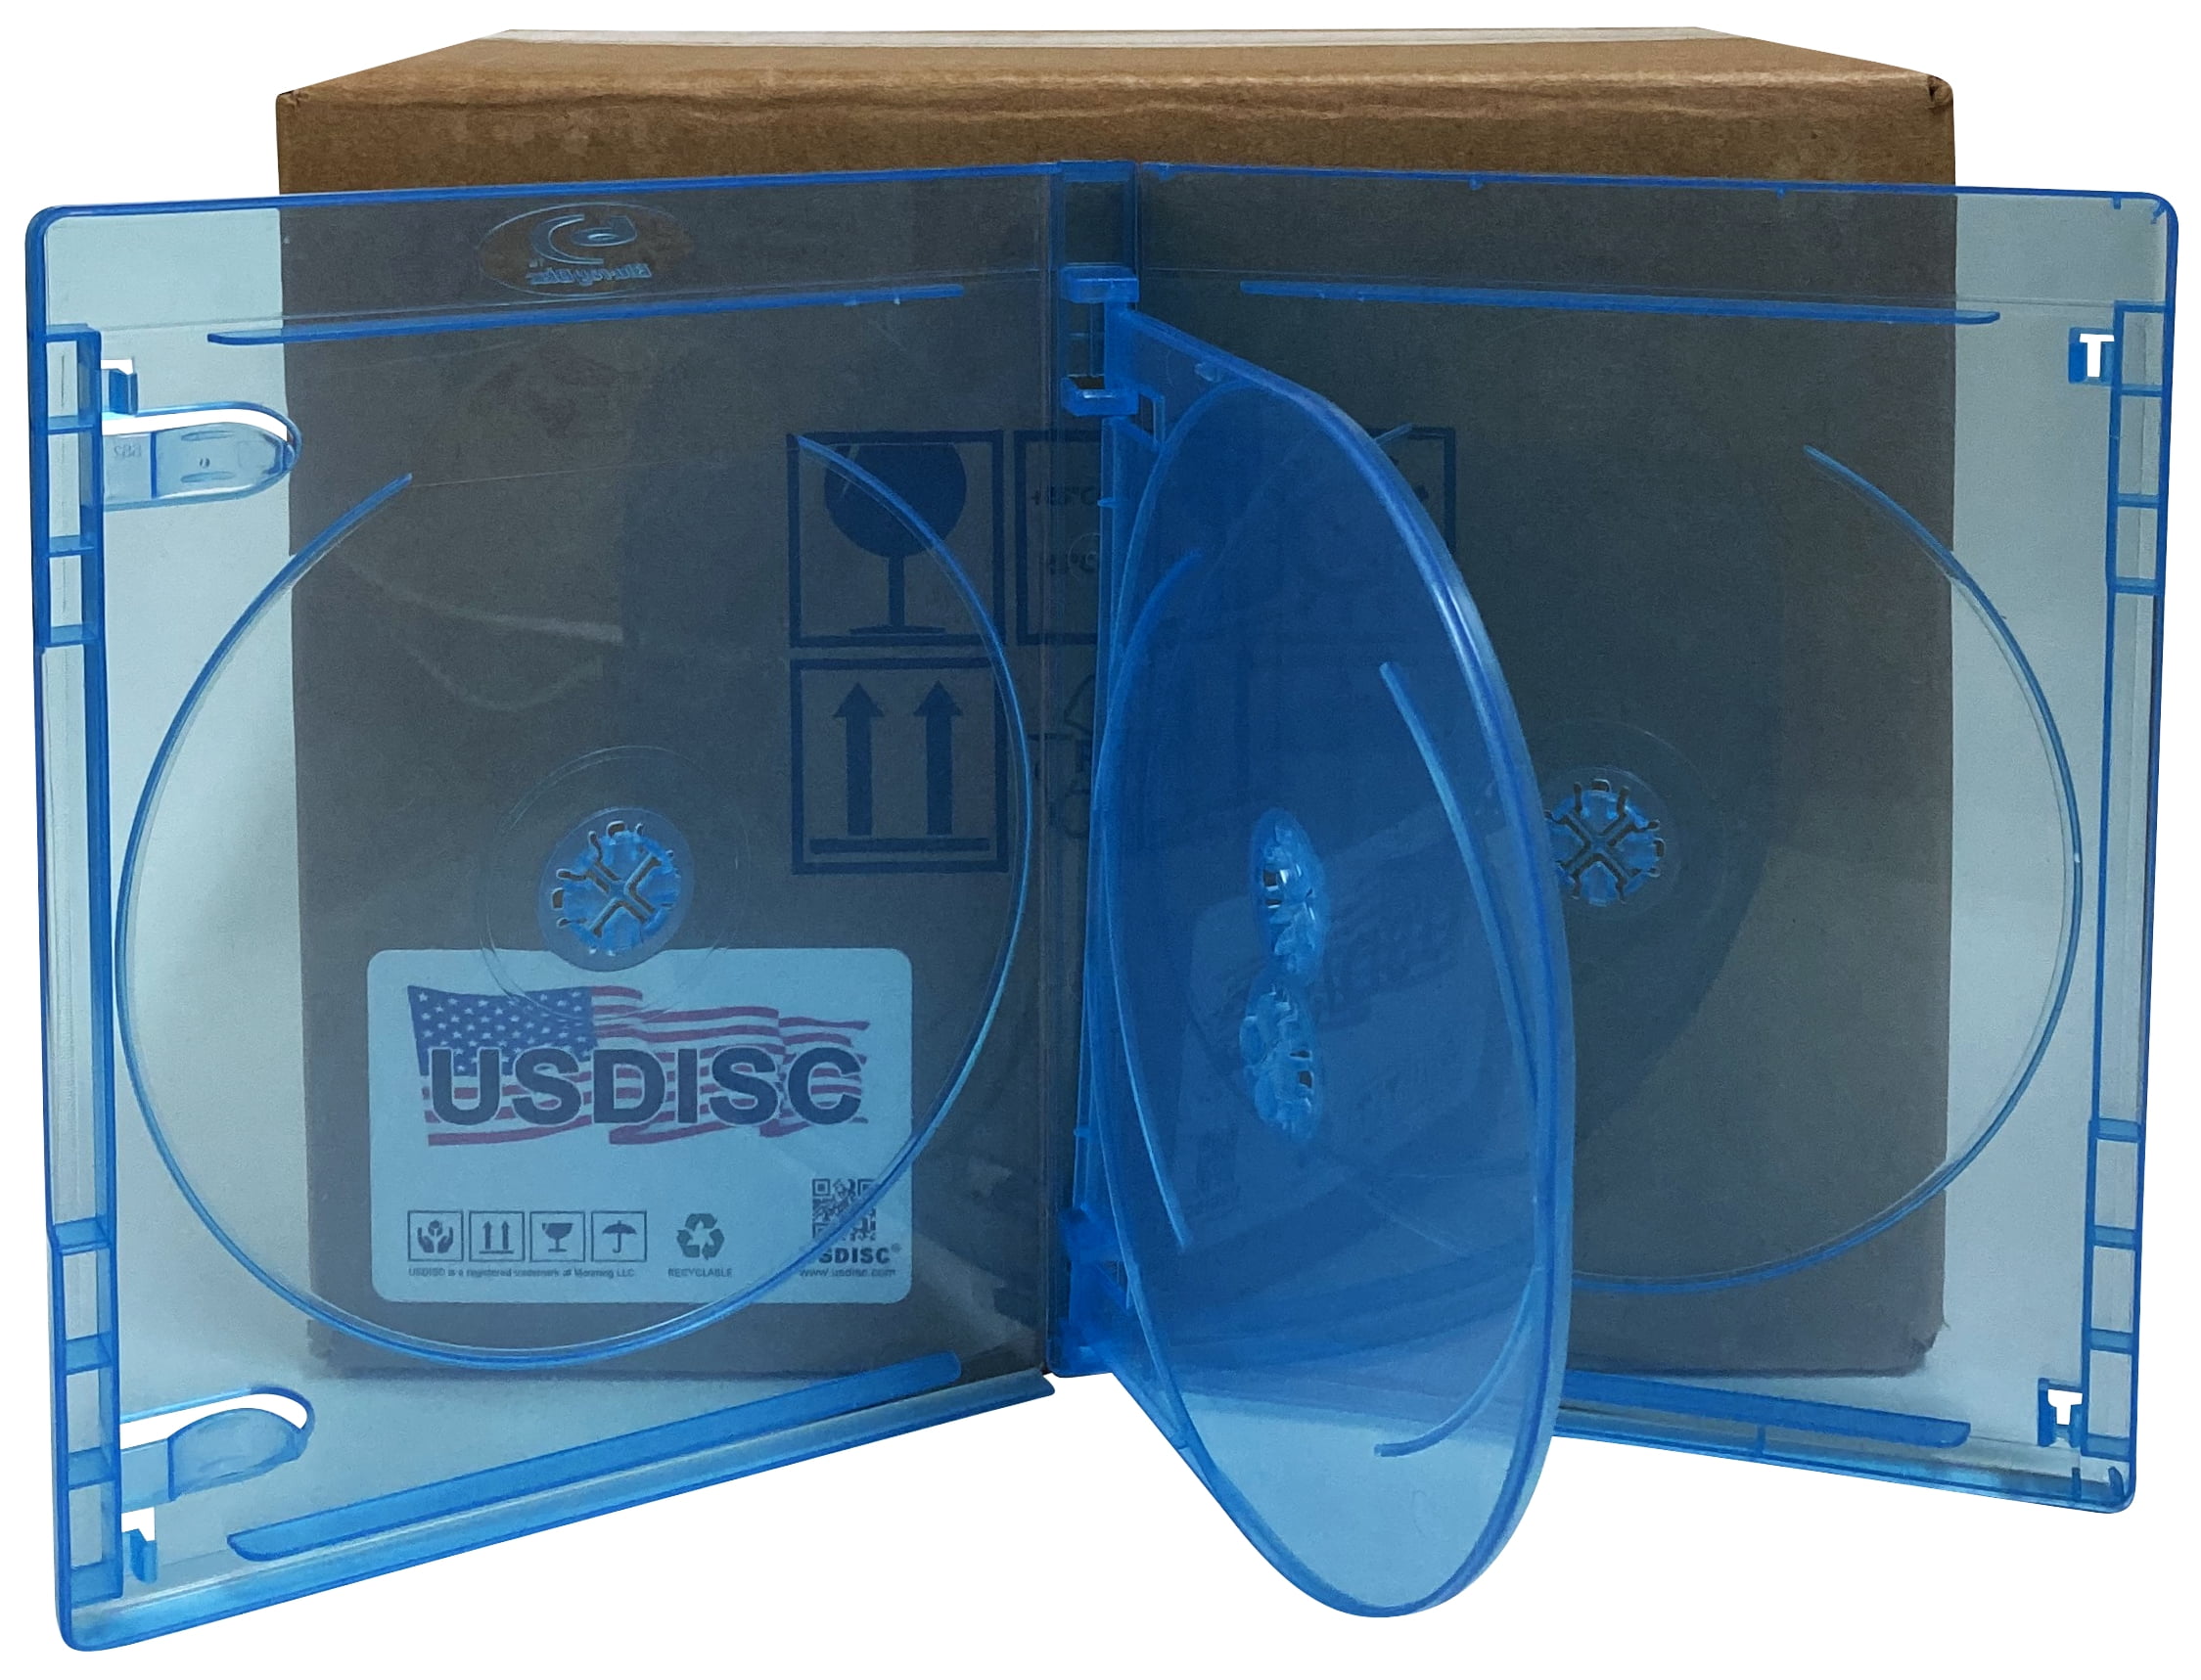 New 100 Pk 14 mm Black Media Storage Box Blu-Ray PS3 Holder PlayStation 3 Case 